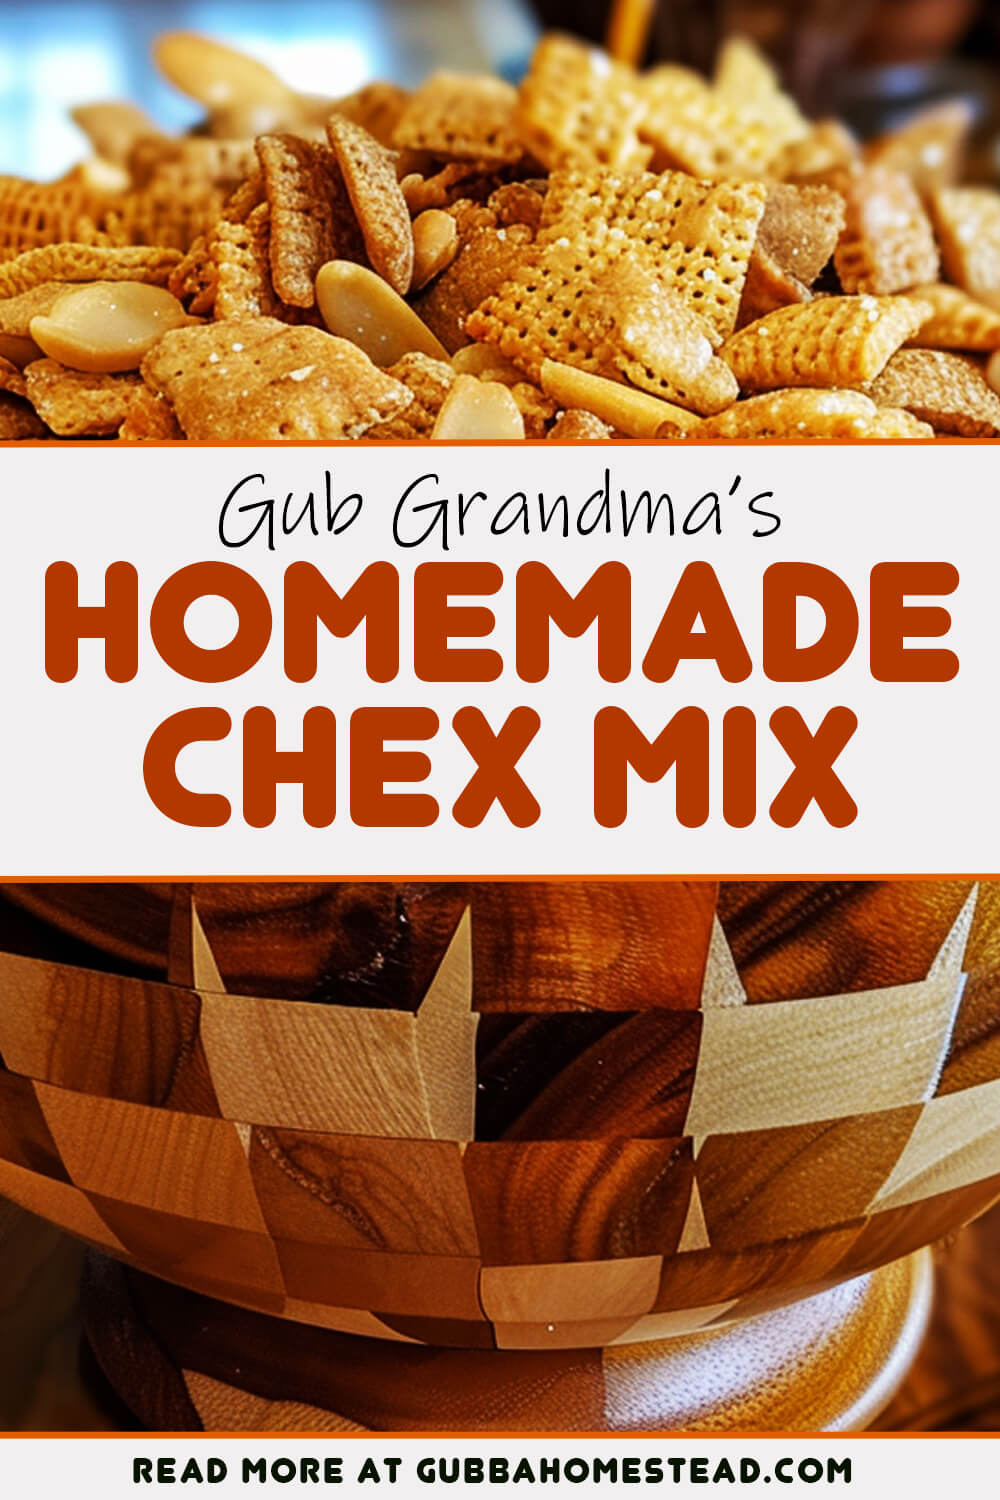 Gub Grandma’s Homemade Chex Mix